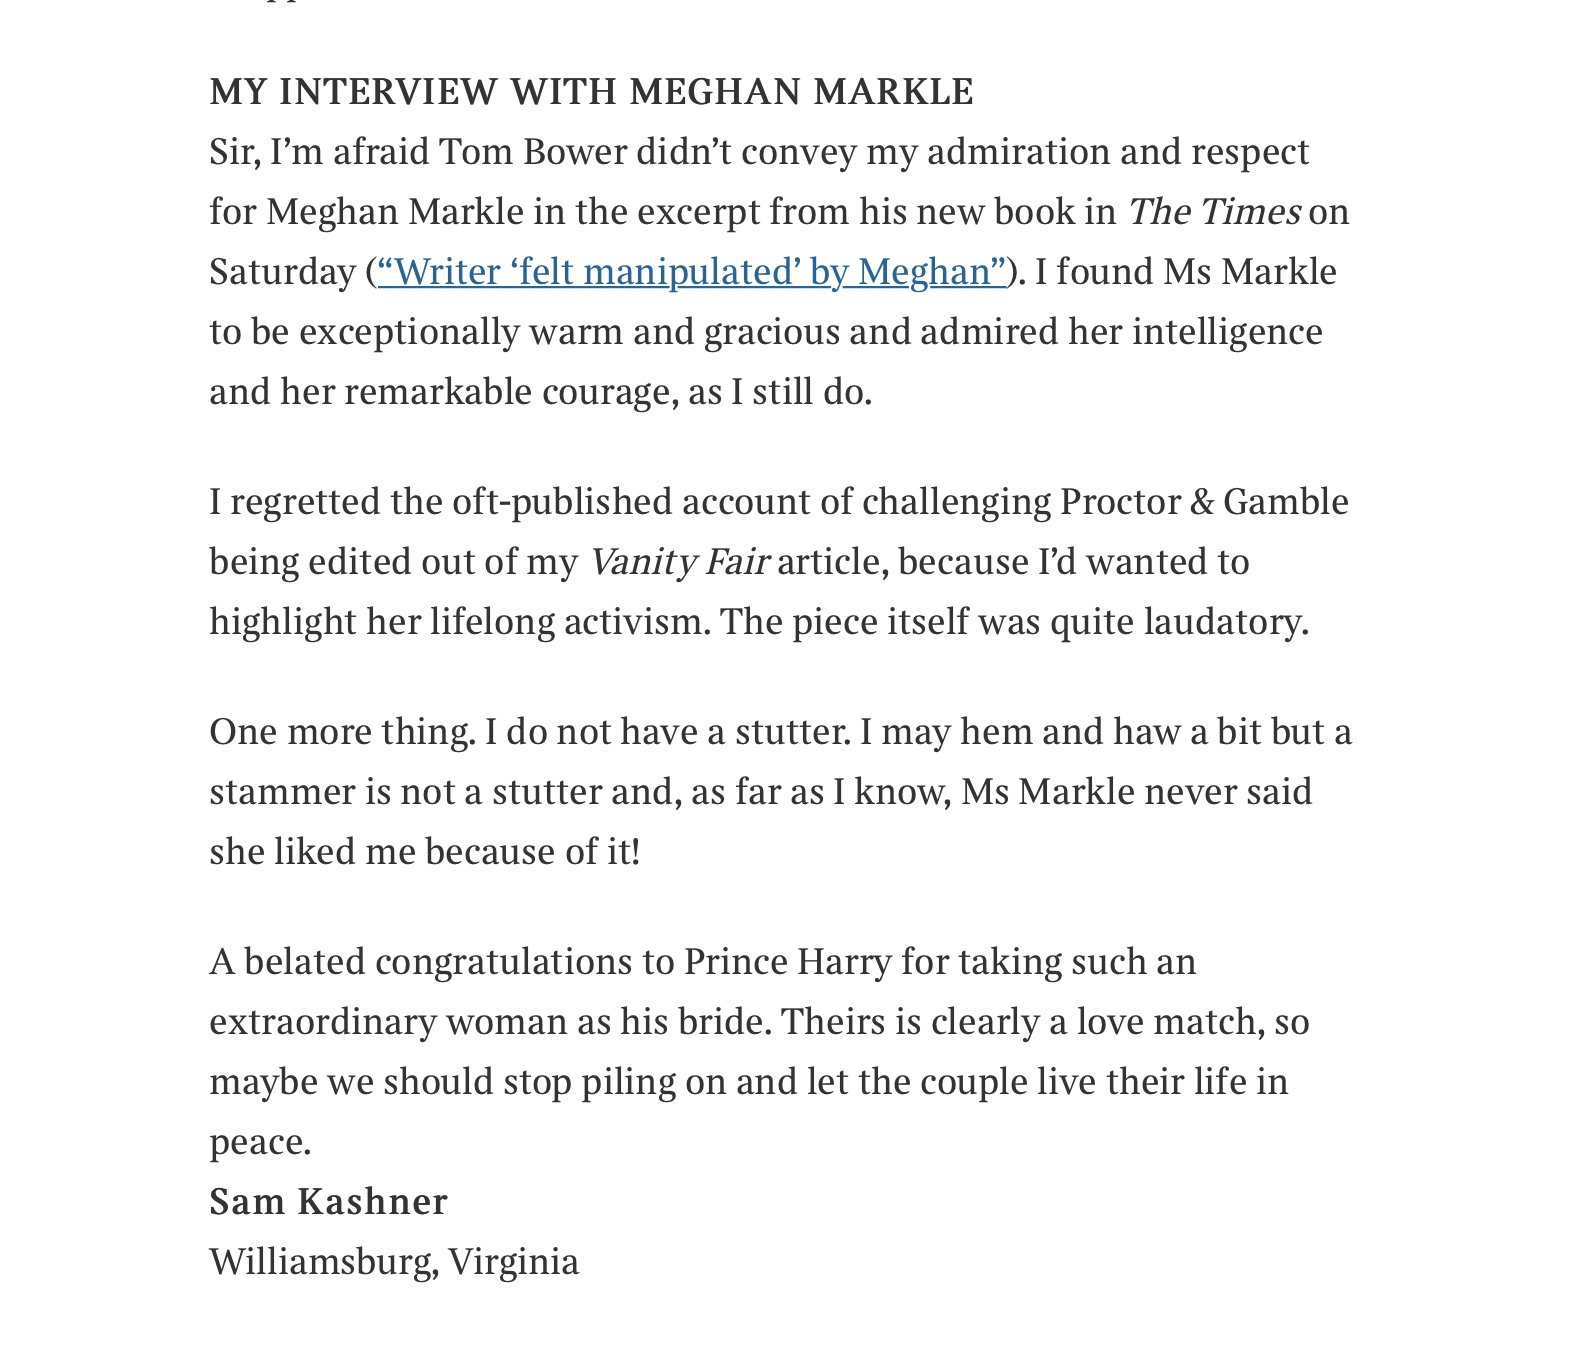 Wartawan menyangkal akun negatif Tom Bower tentang pengalamannya mewawancarai Meghan Markle